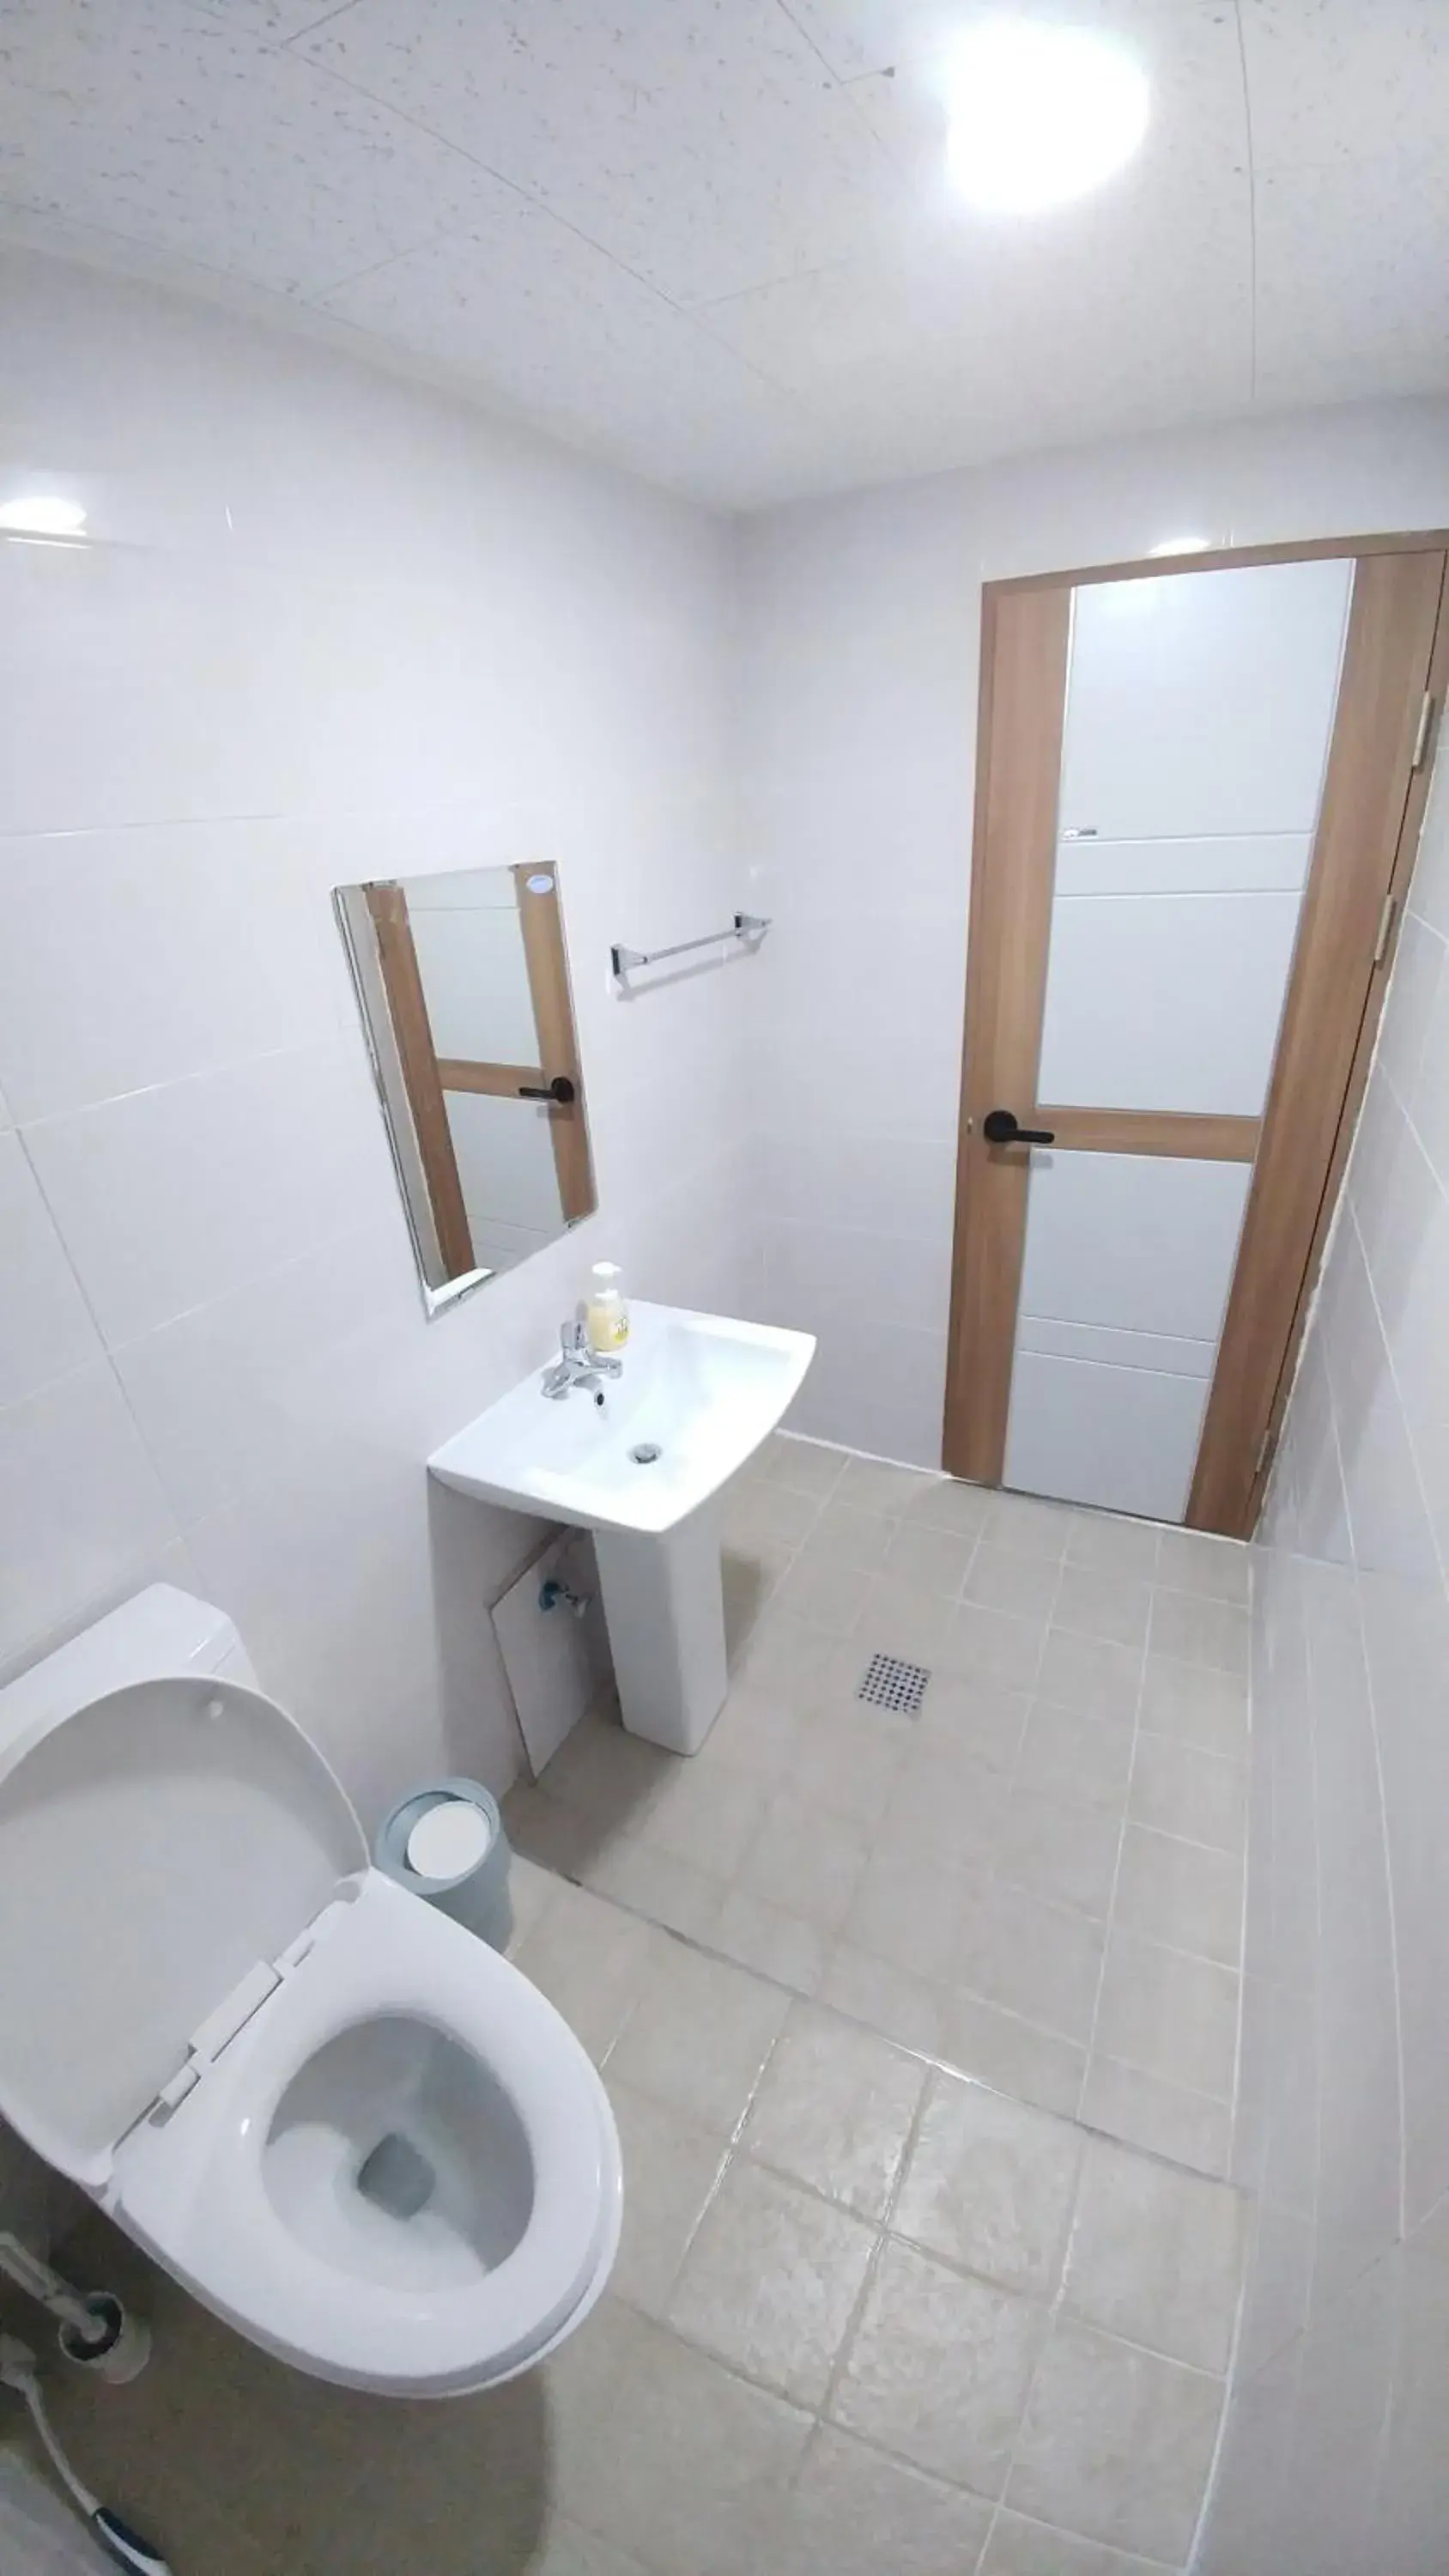 Toilet, Bathroom in Hause itaewon